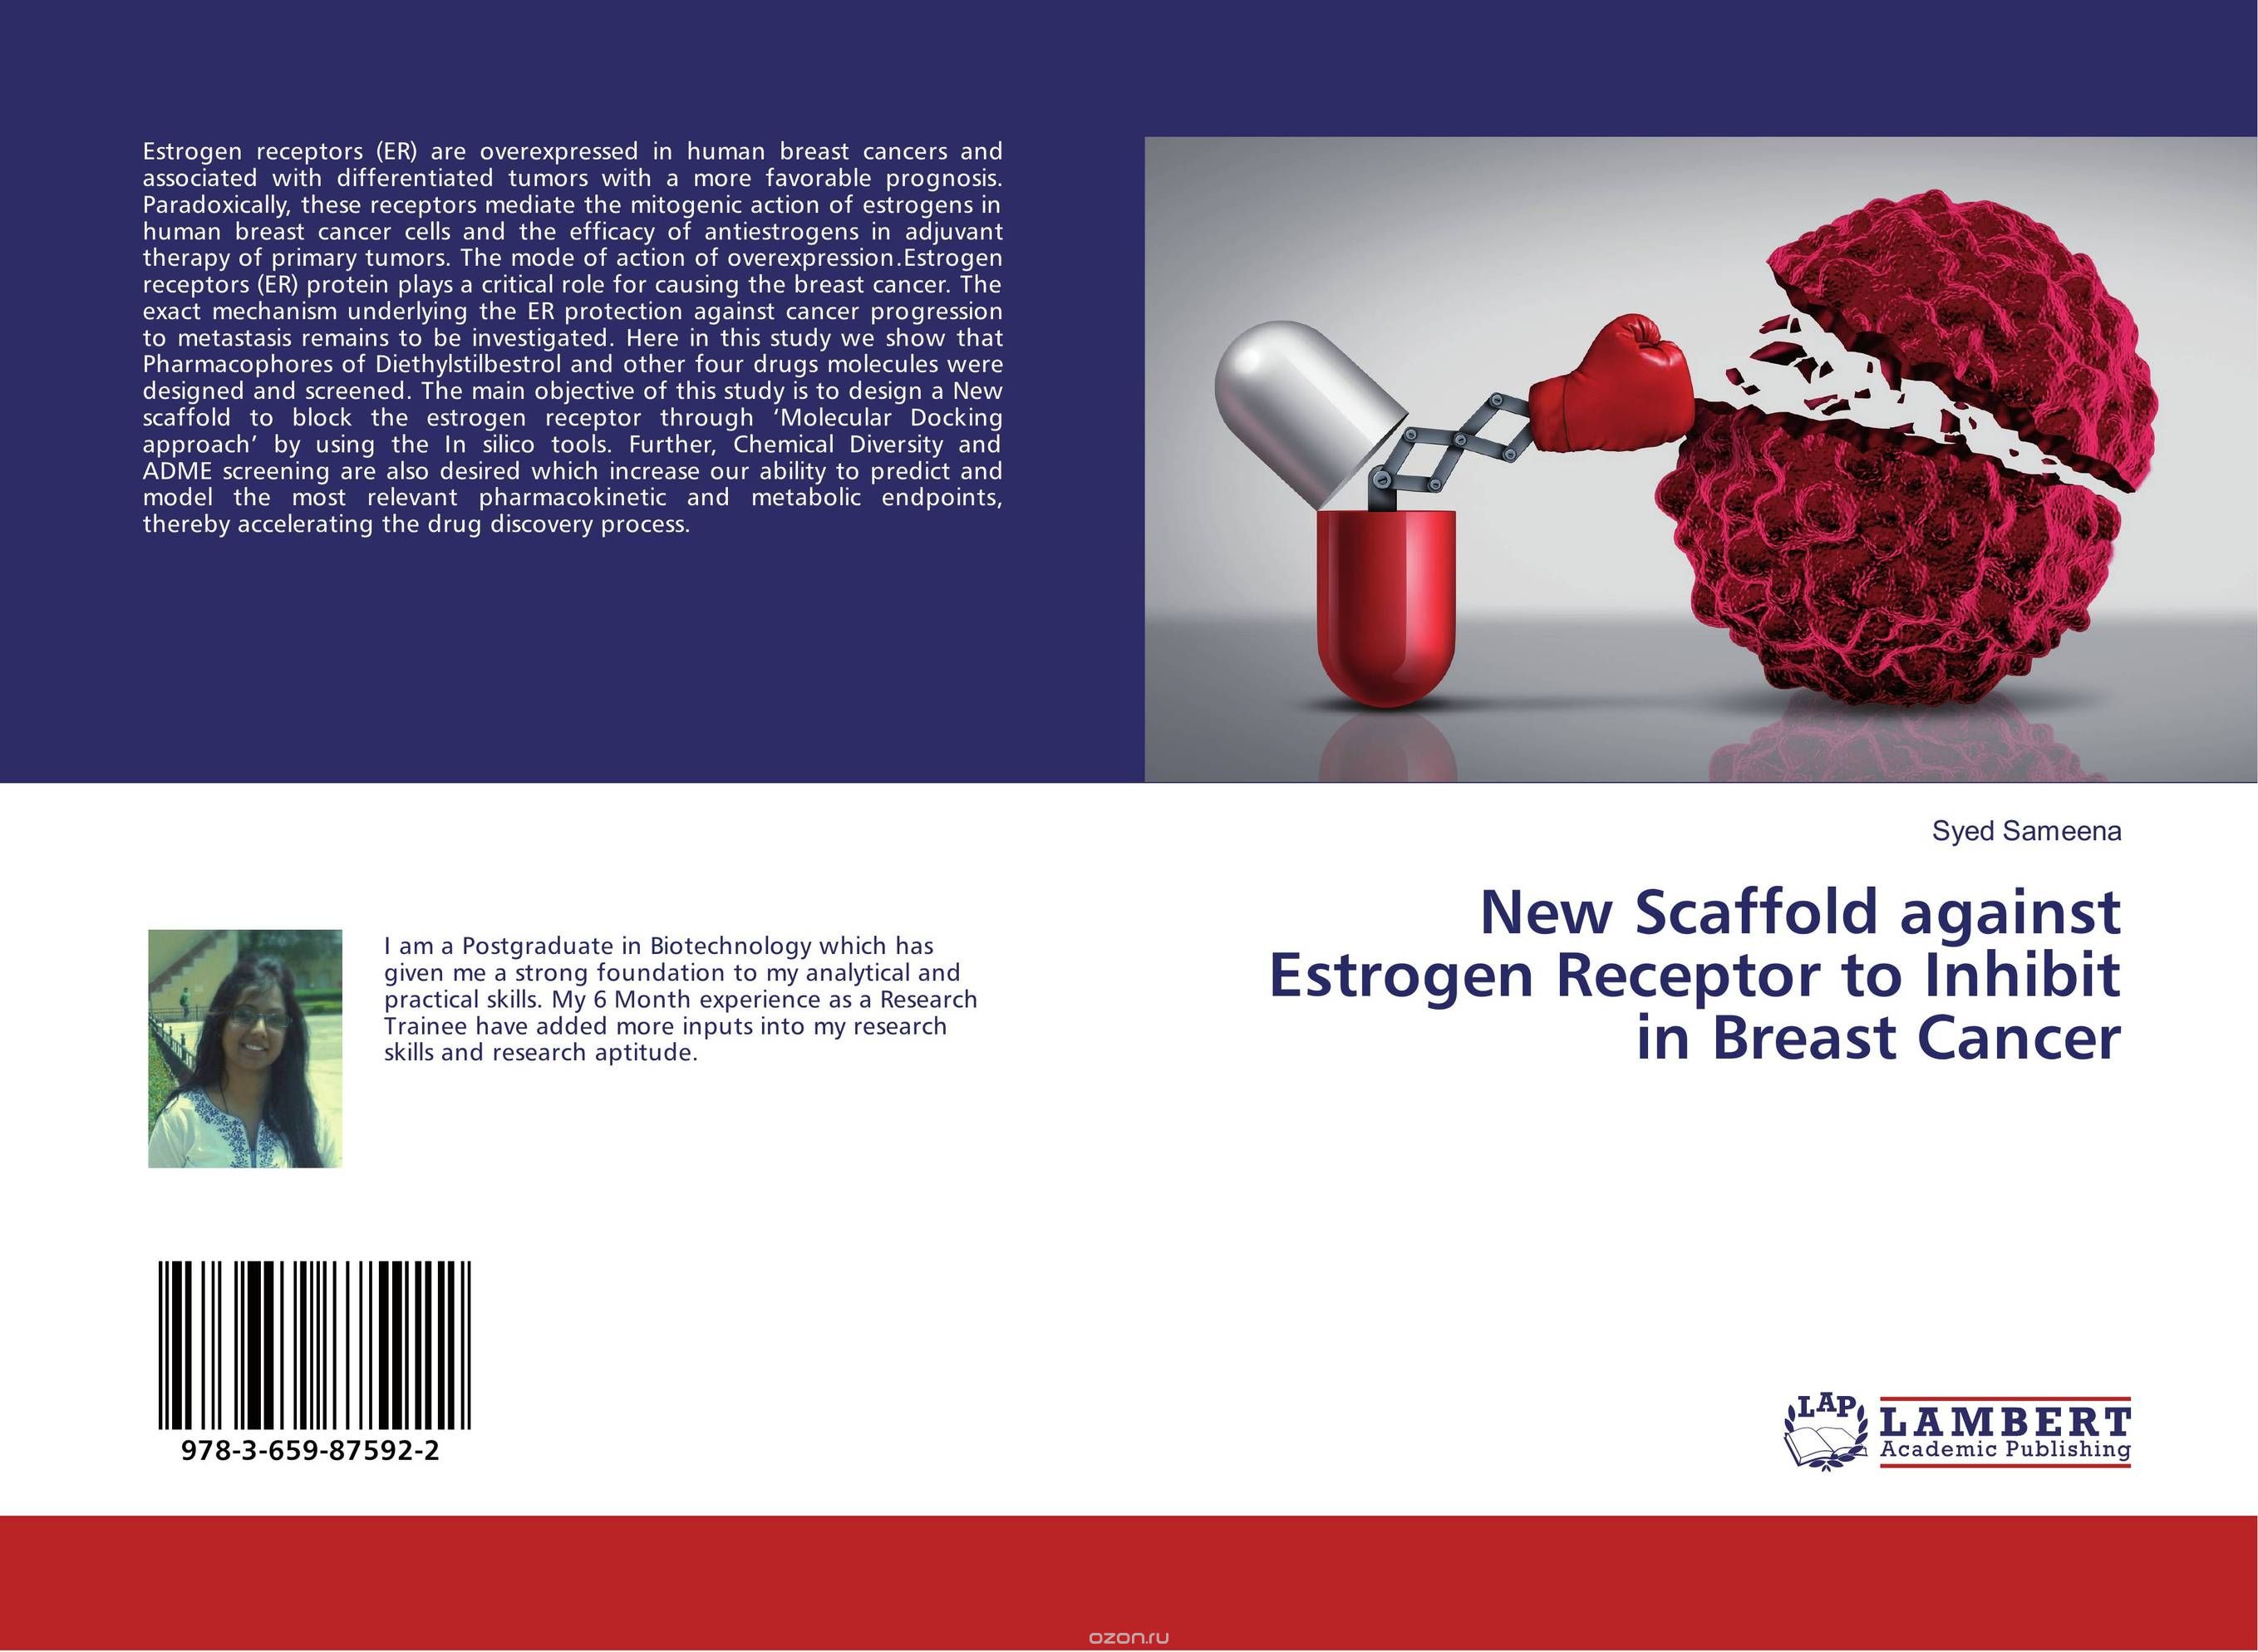 New Scaffold against Estrogen Receptor to Inhibit in Breast Cancer